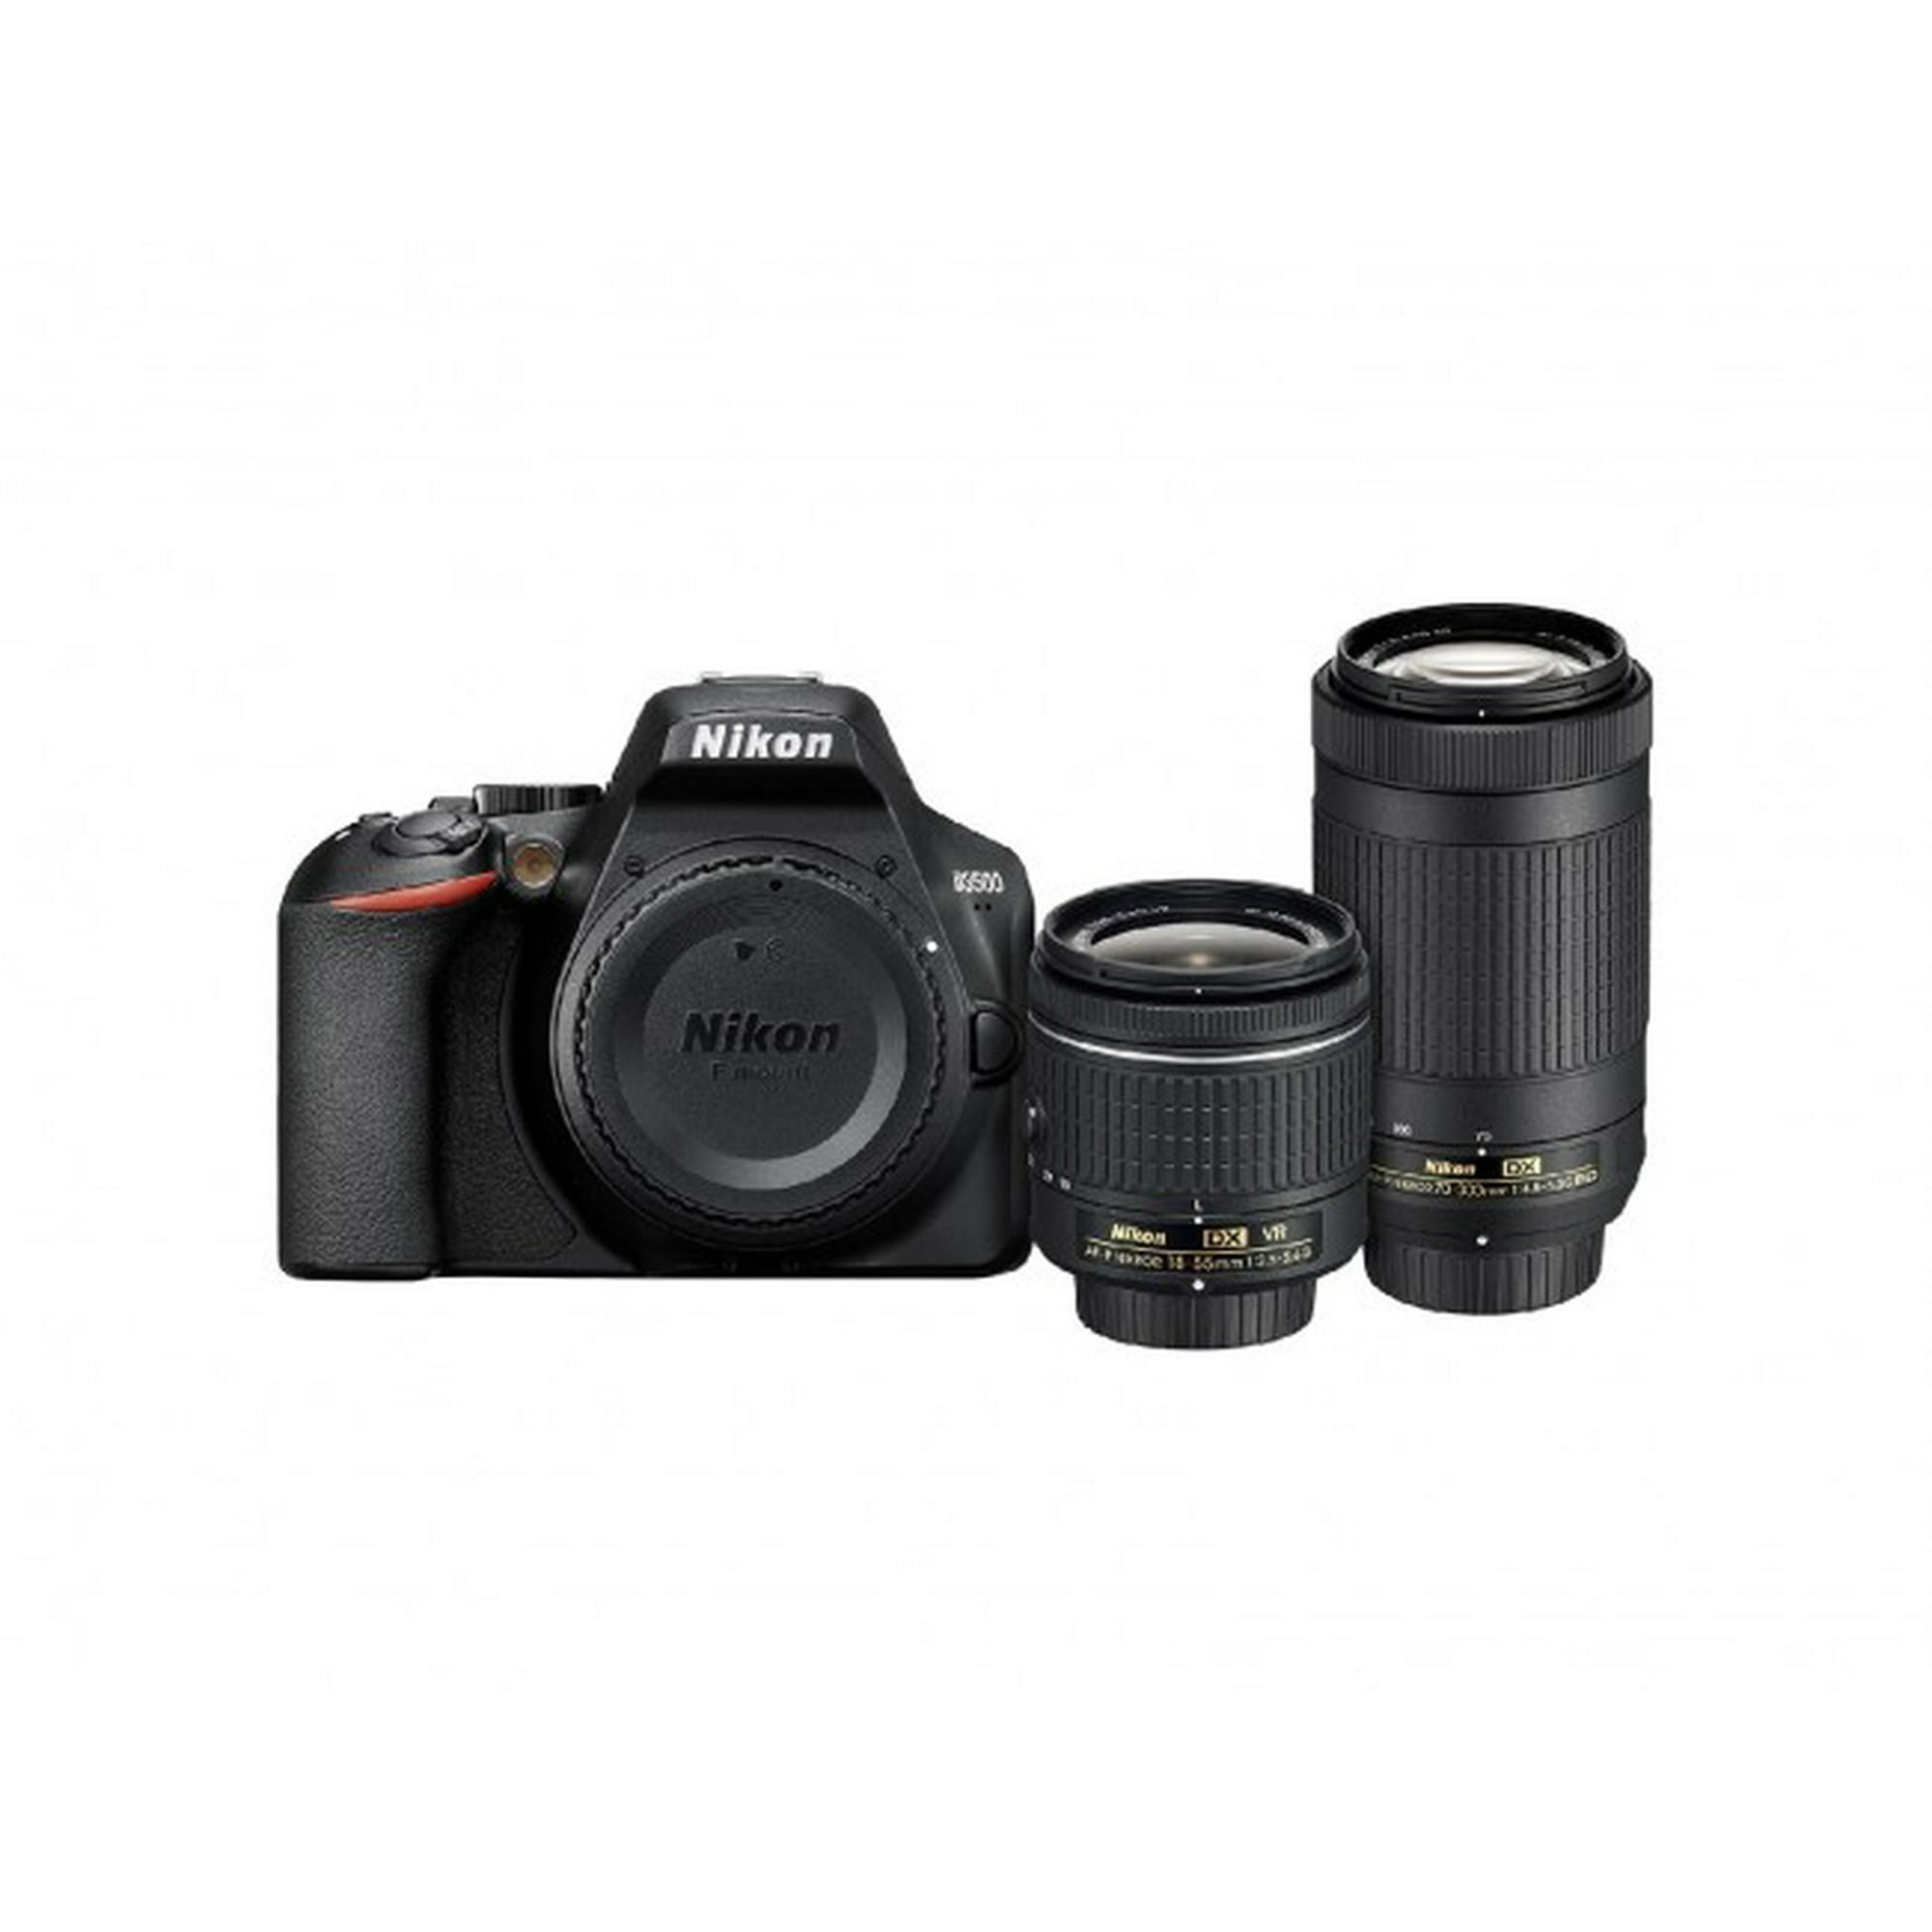 Nikon D3500 Body (Black) at Online Price in Maxico - Gadgetward Mexico